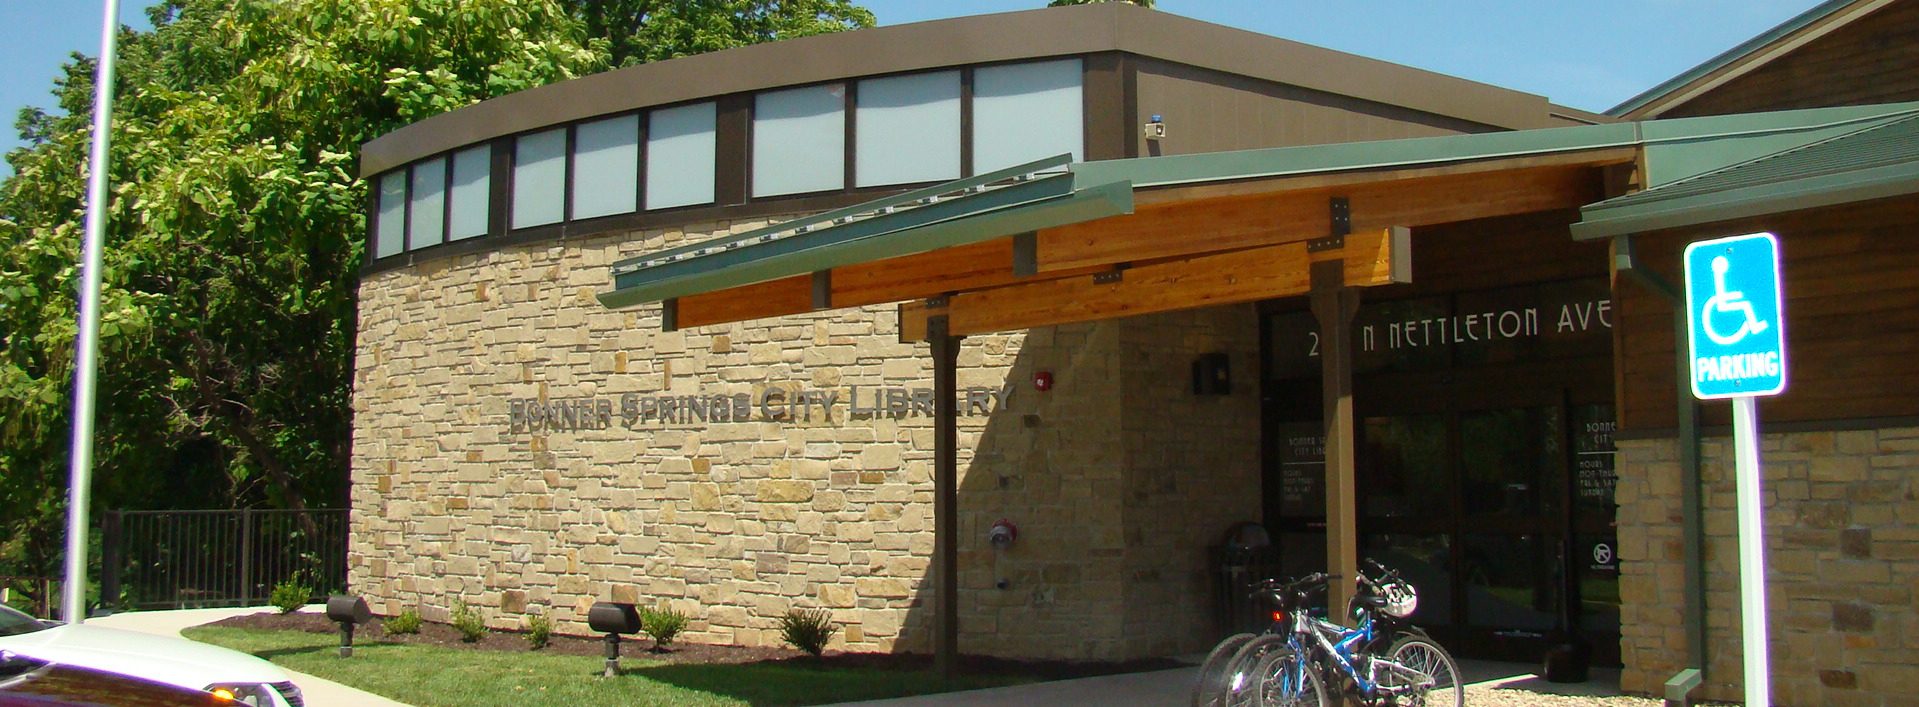 Bonner Springs City Library